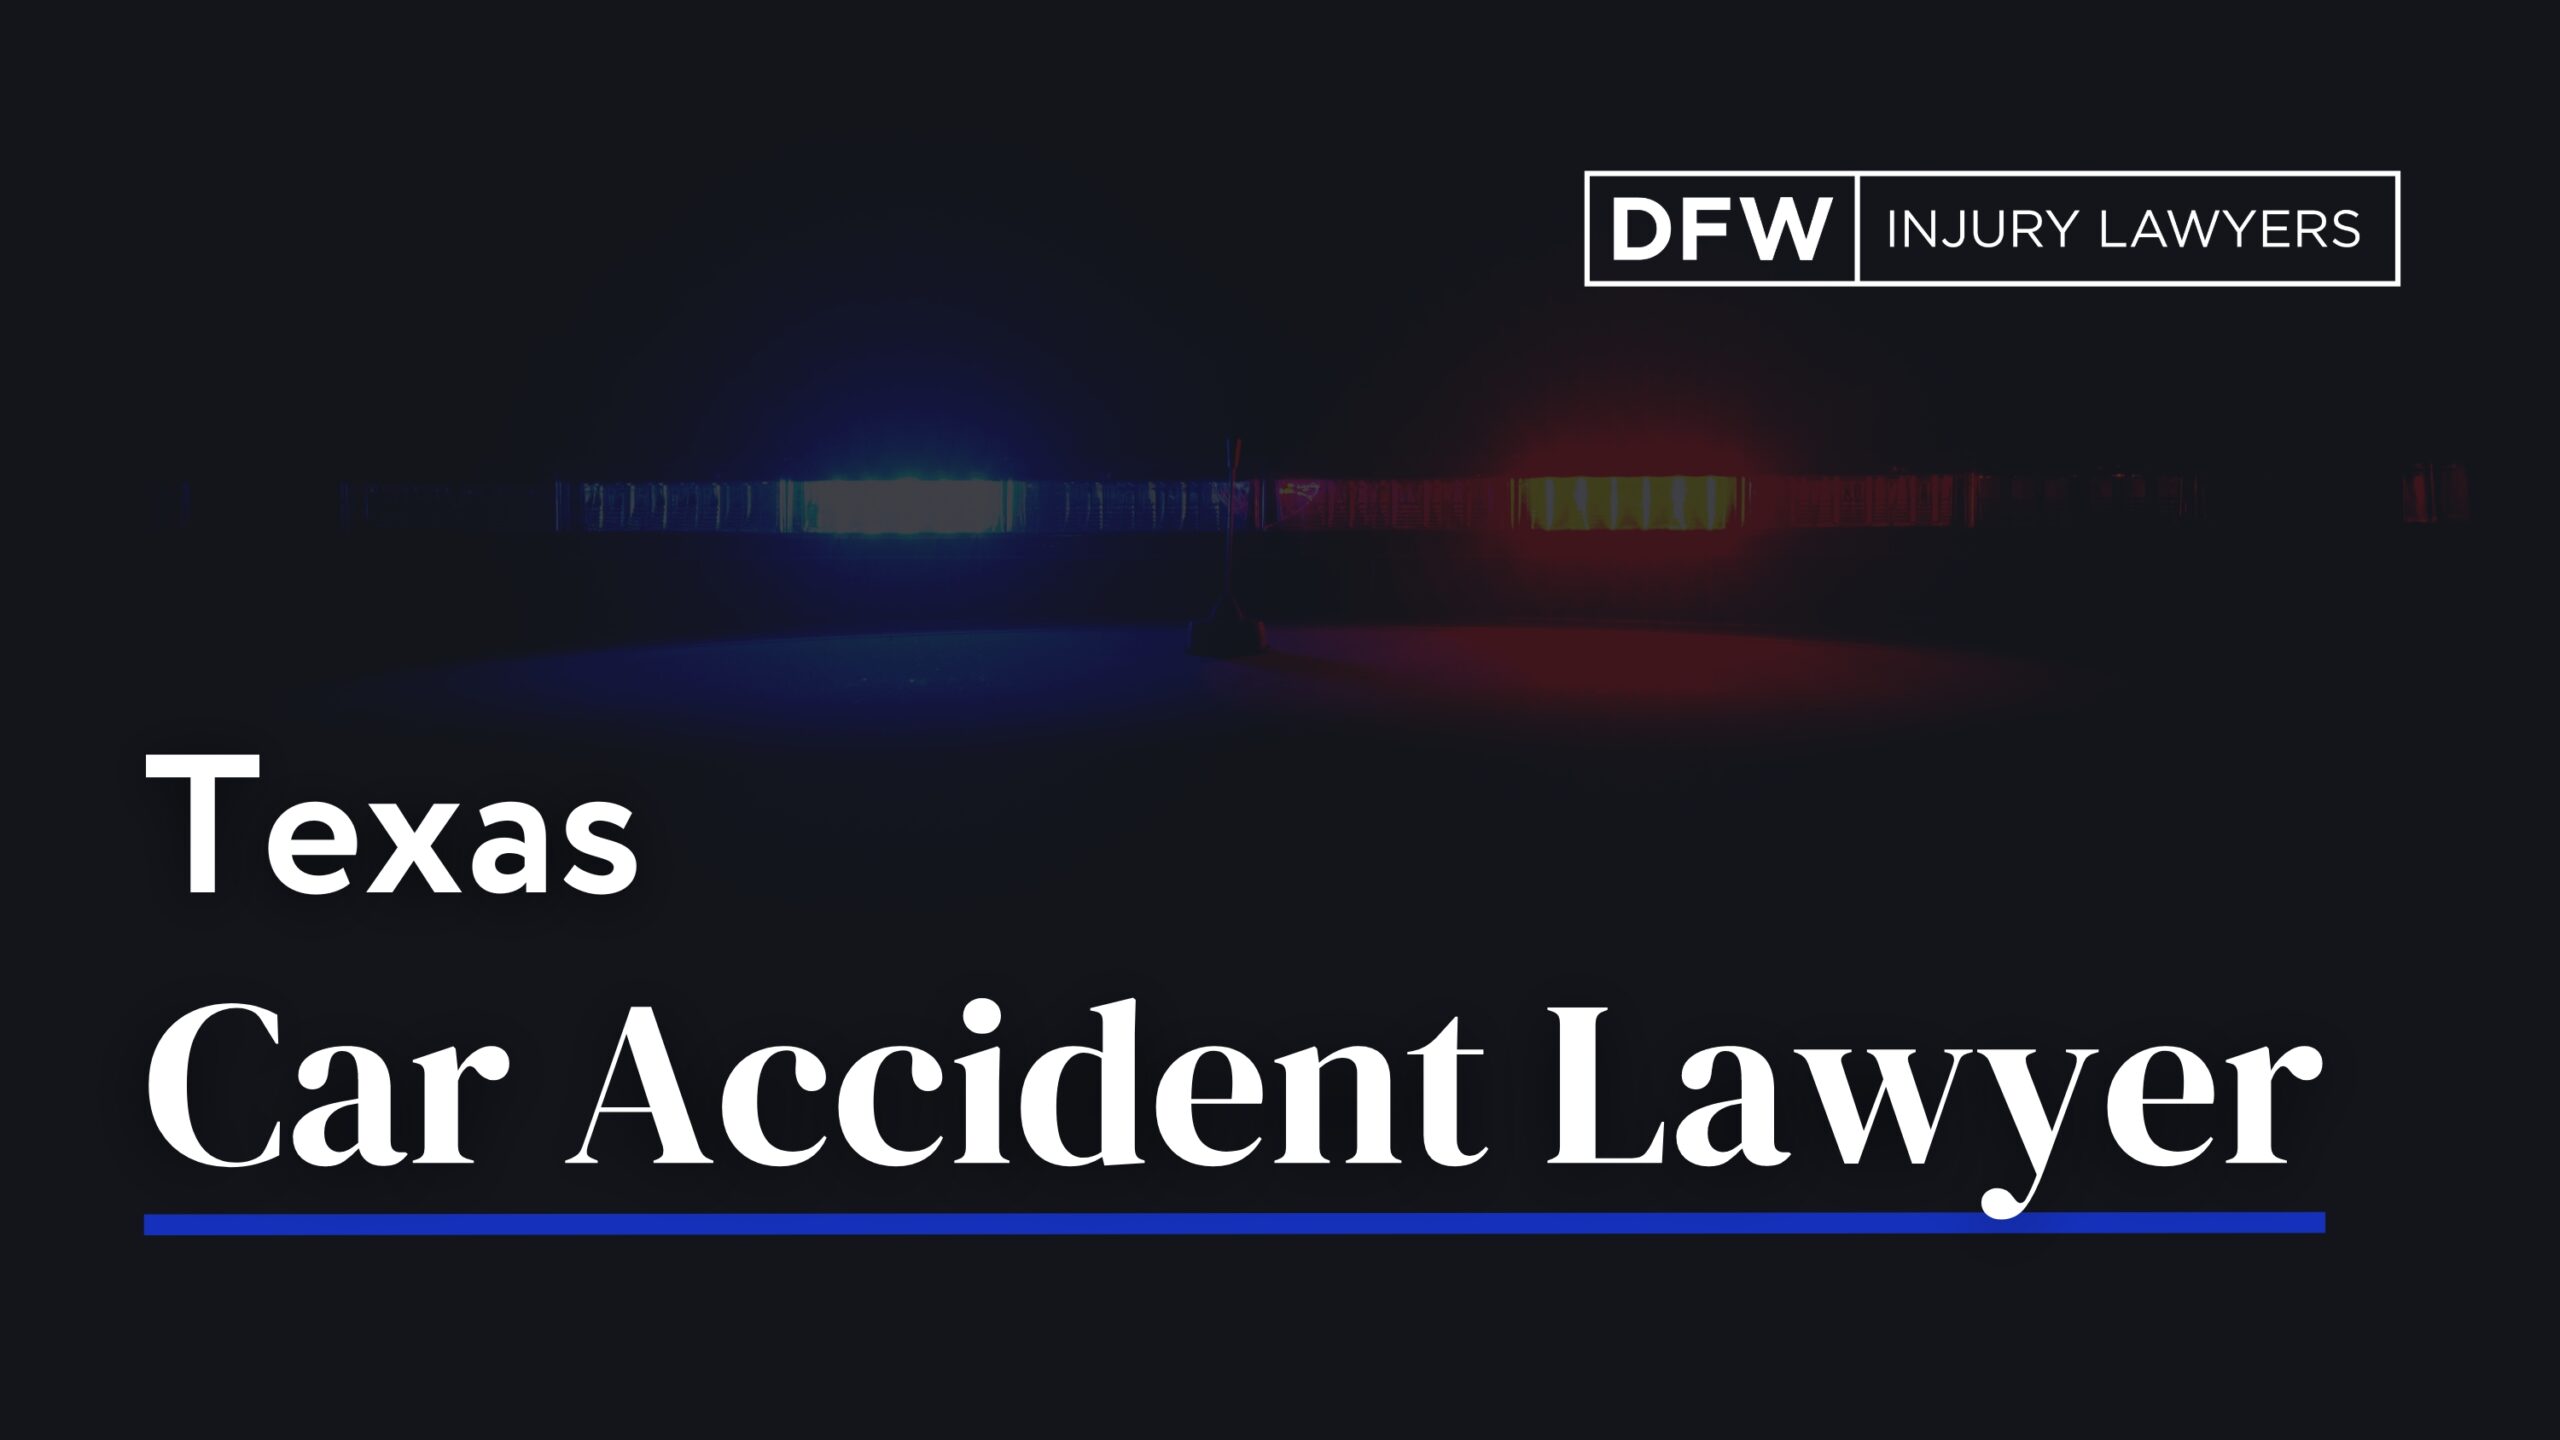 Texas Car Accident Lawyer - DFW